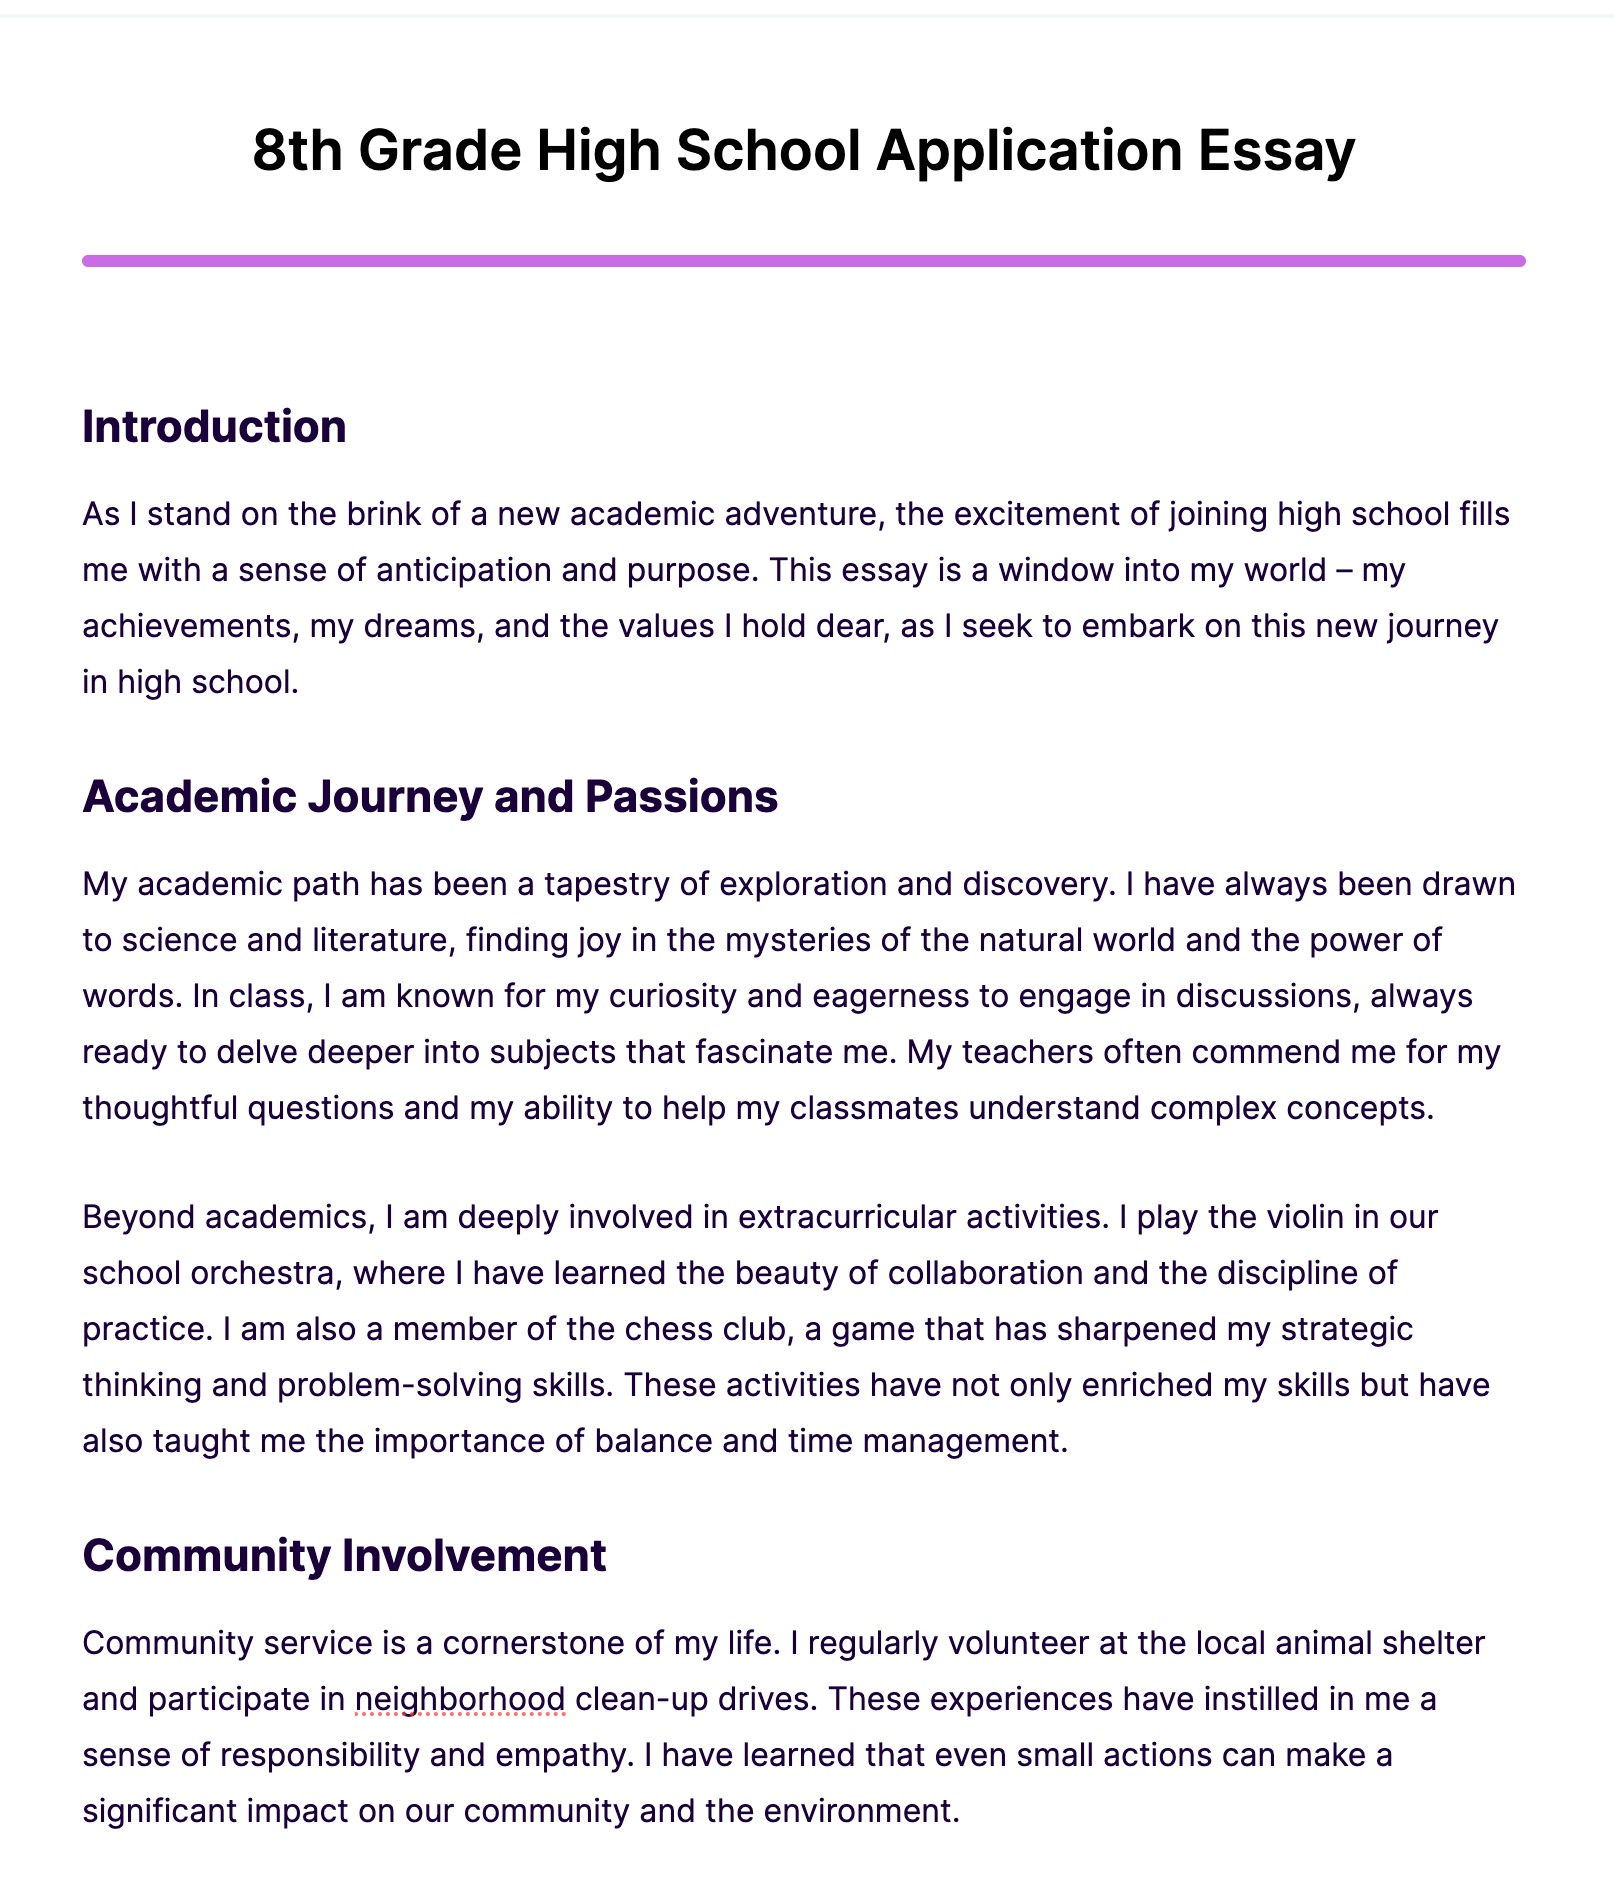 8th Grade High School Application Essay